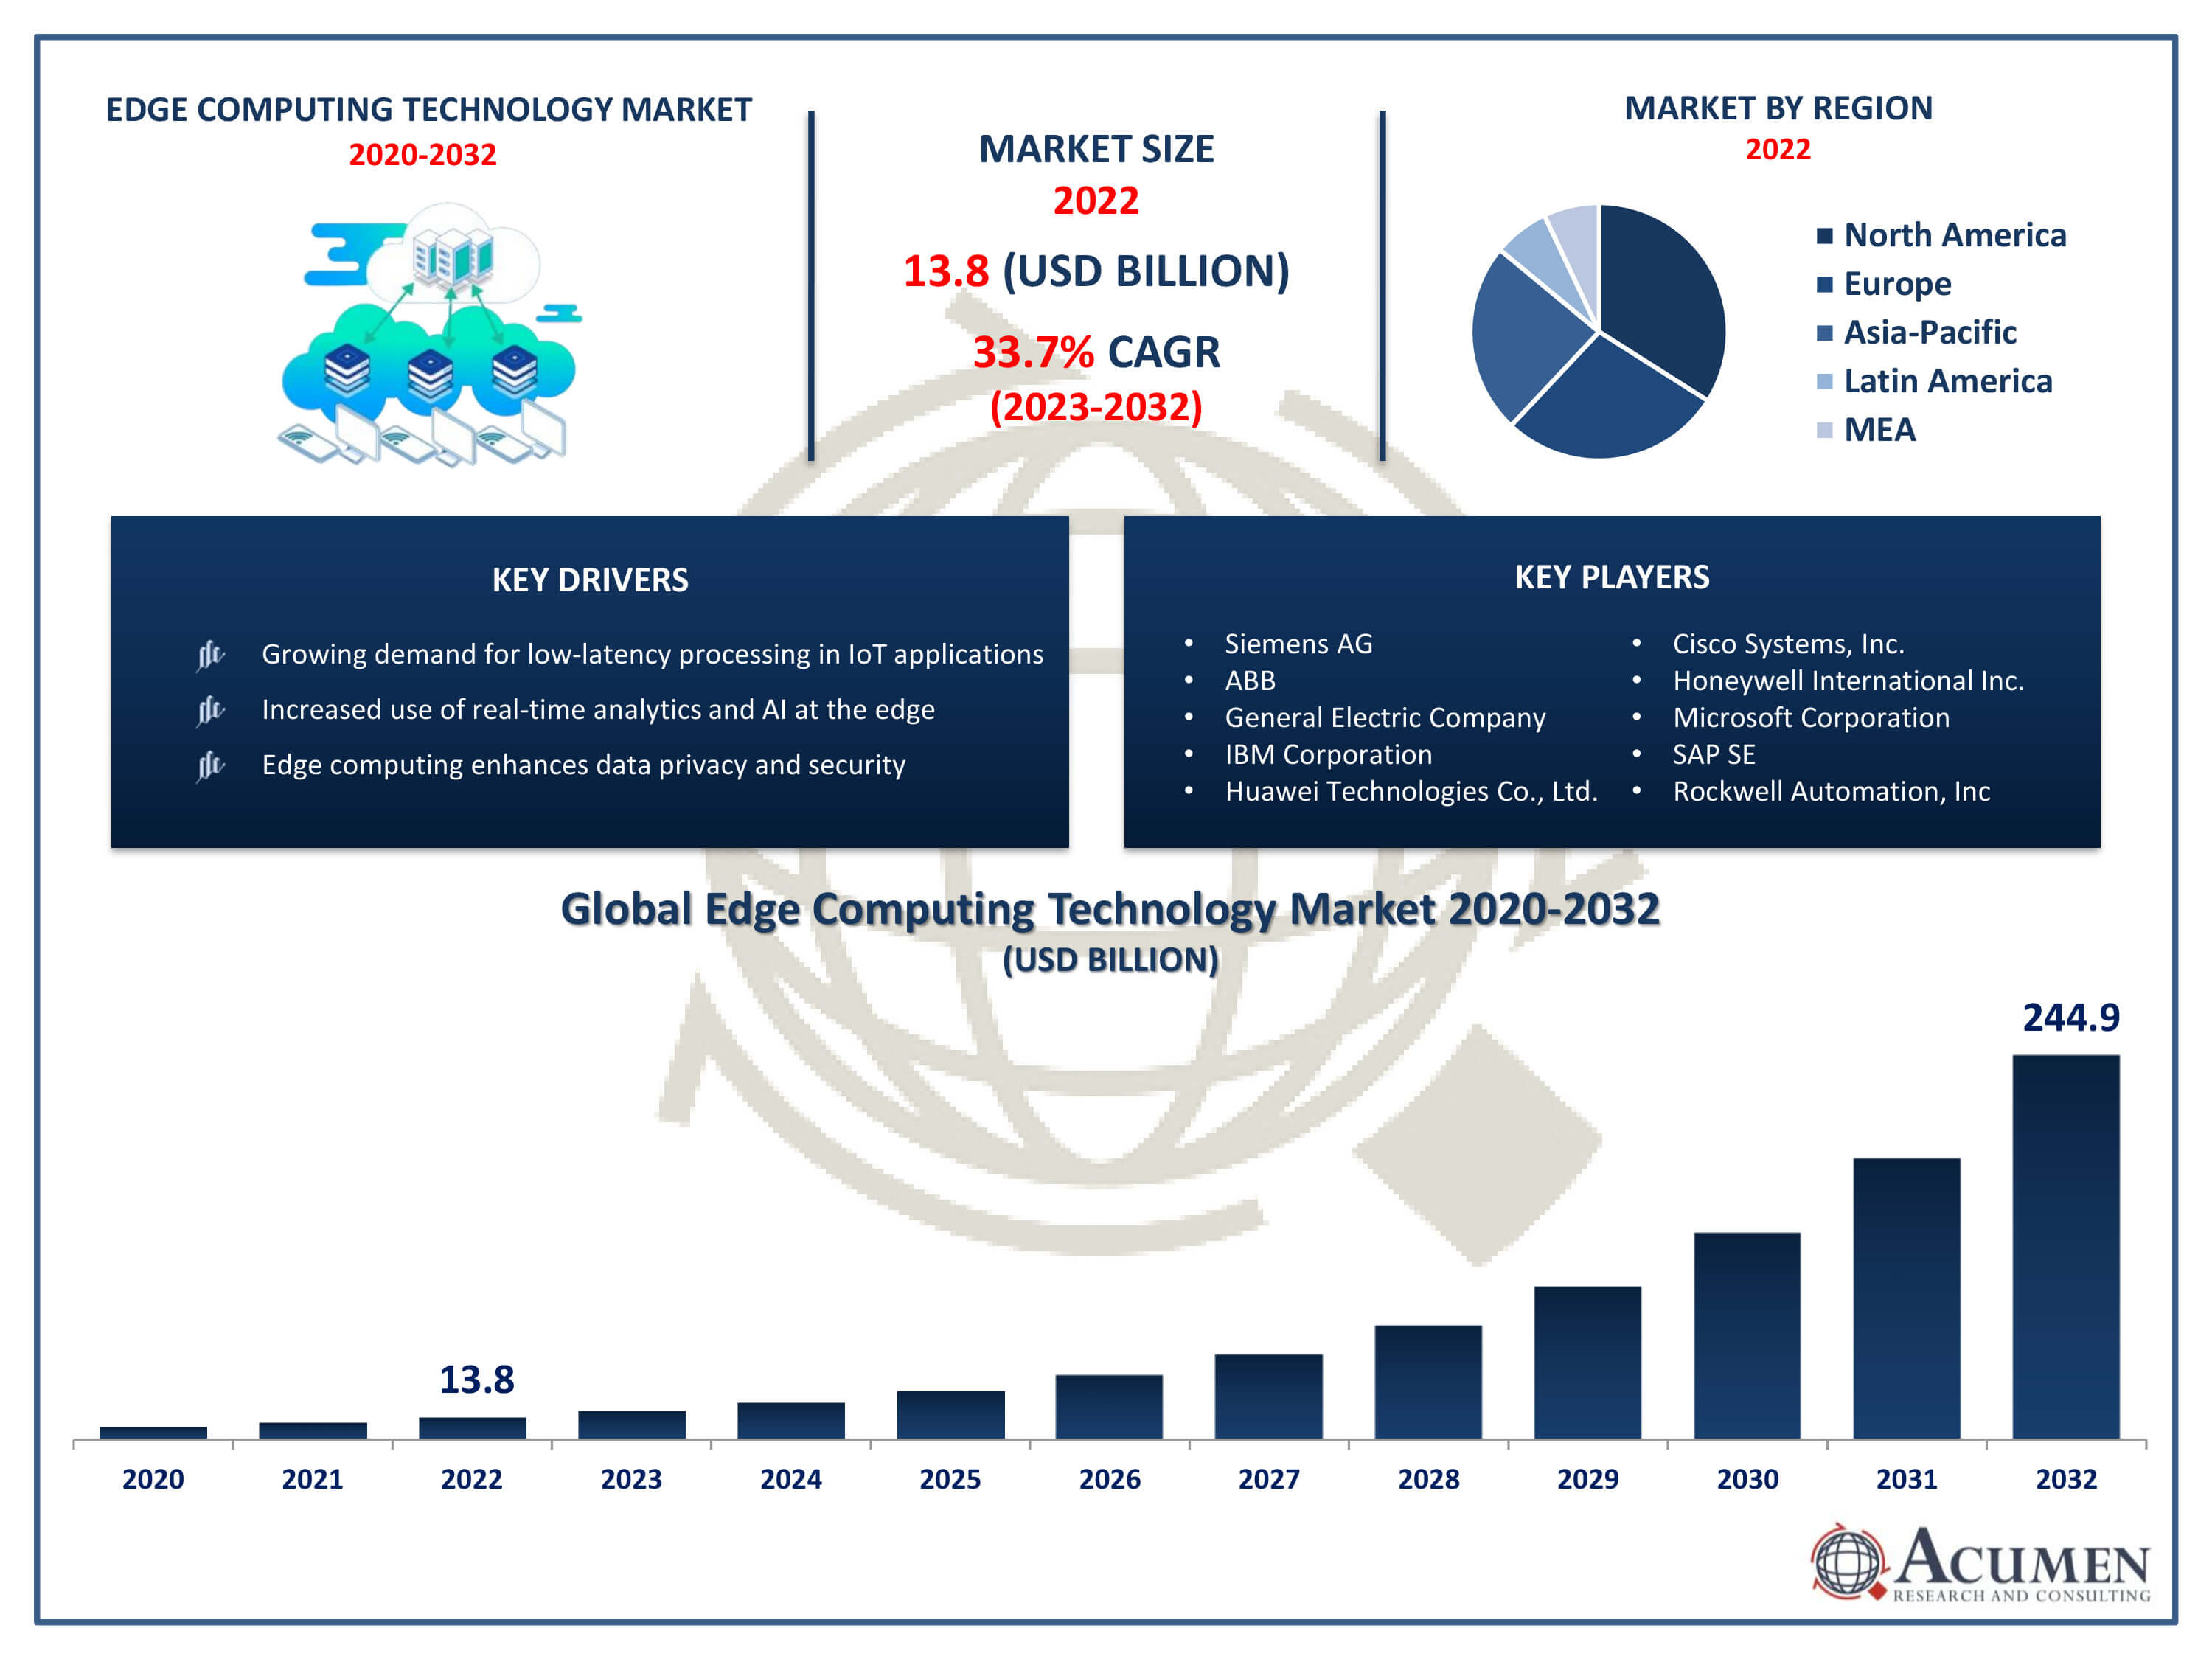 Edge Computing Technology Market Trends